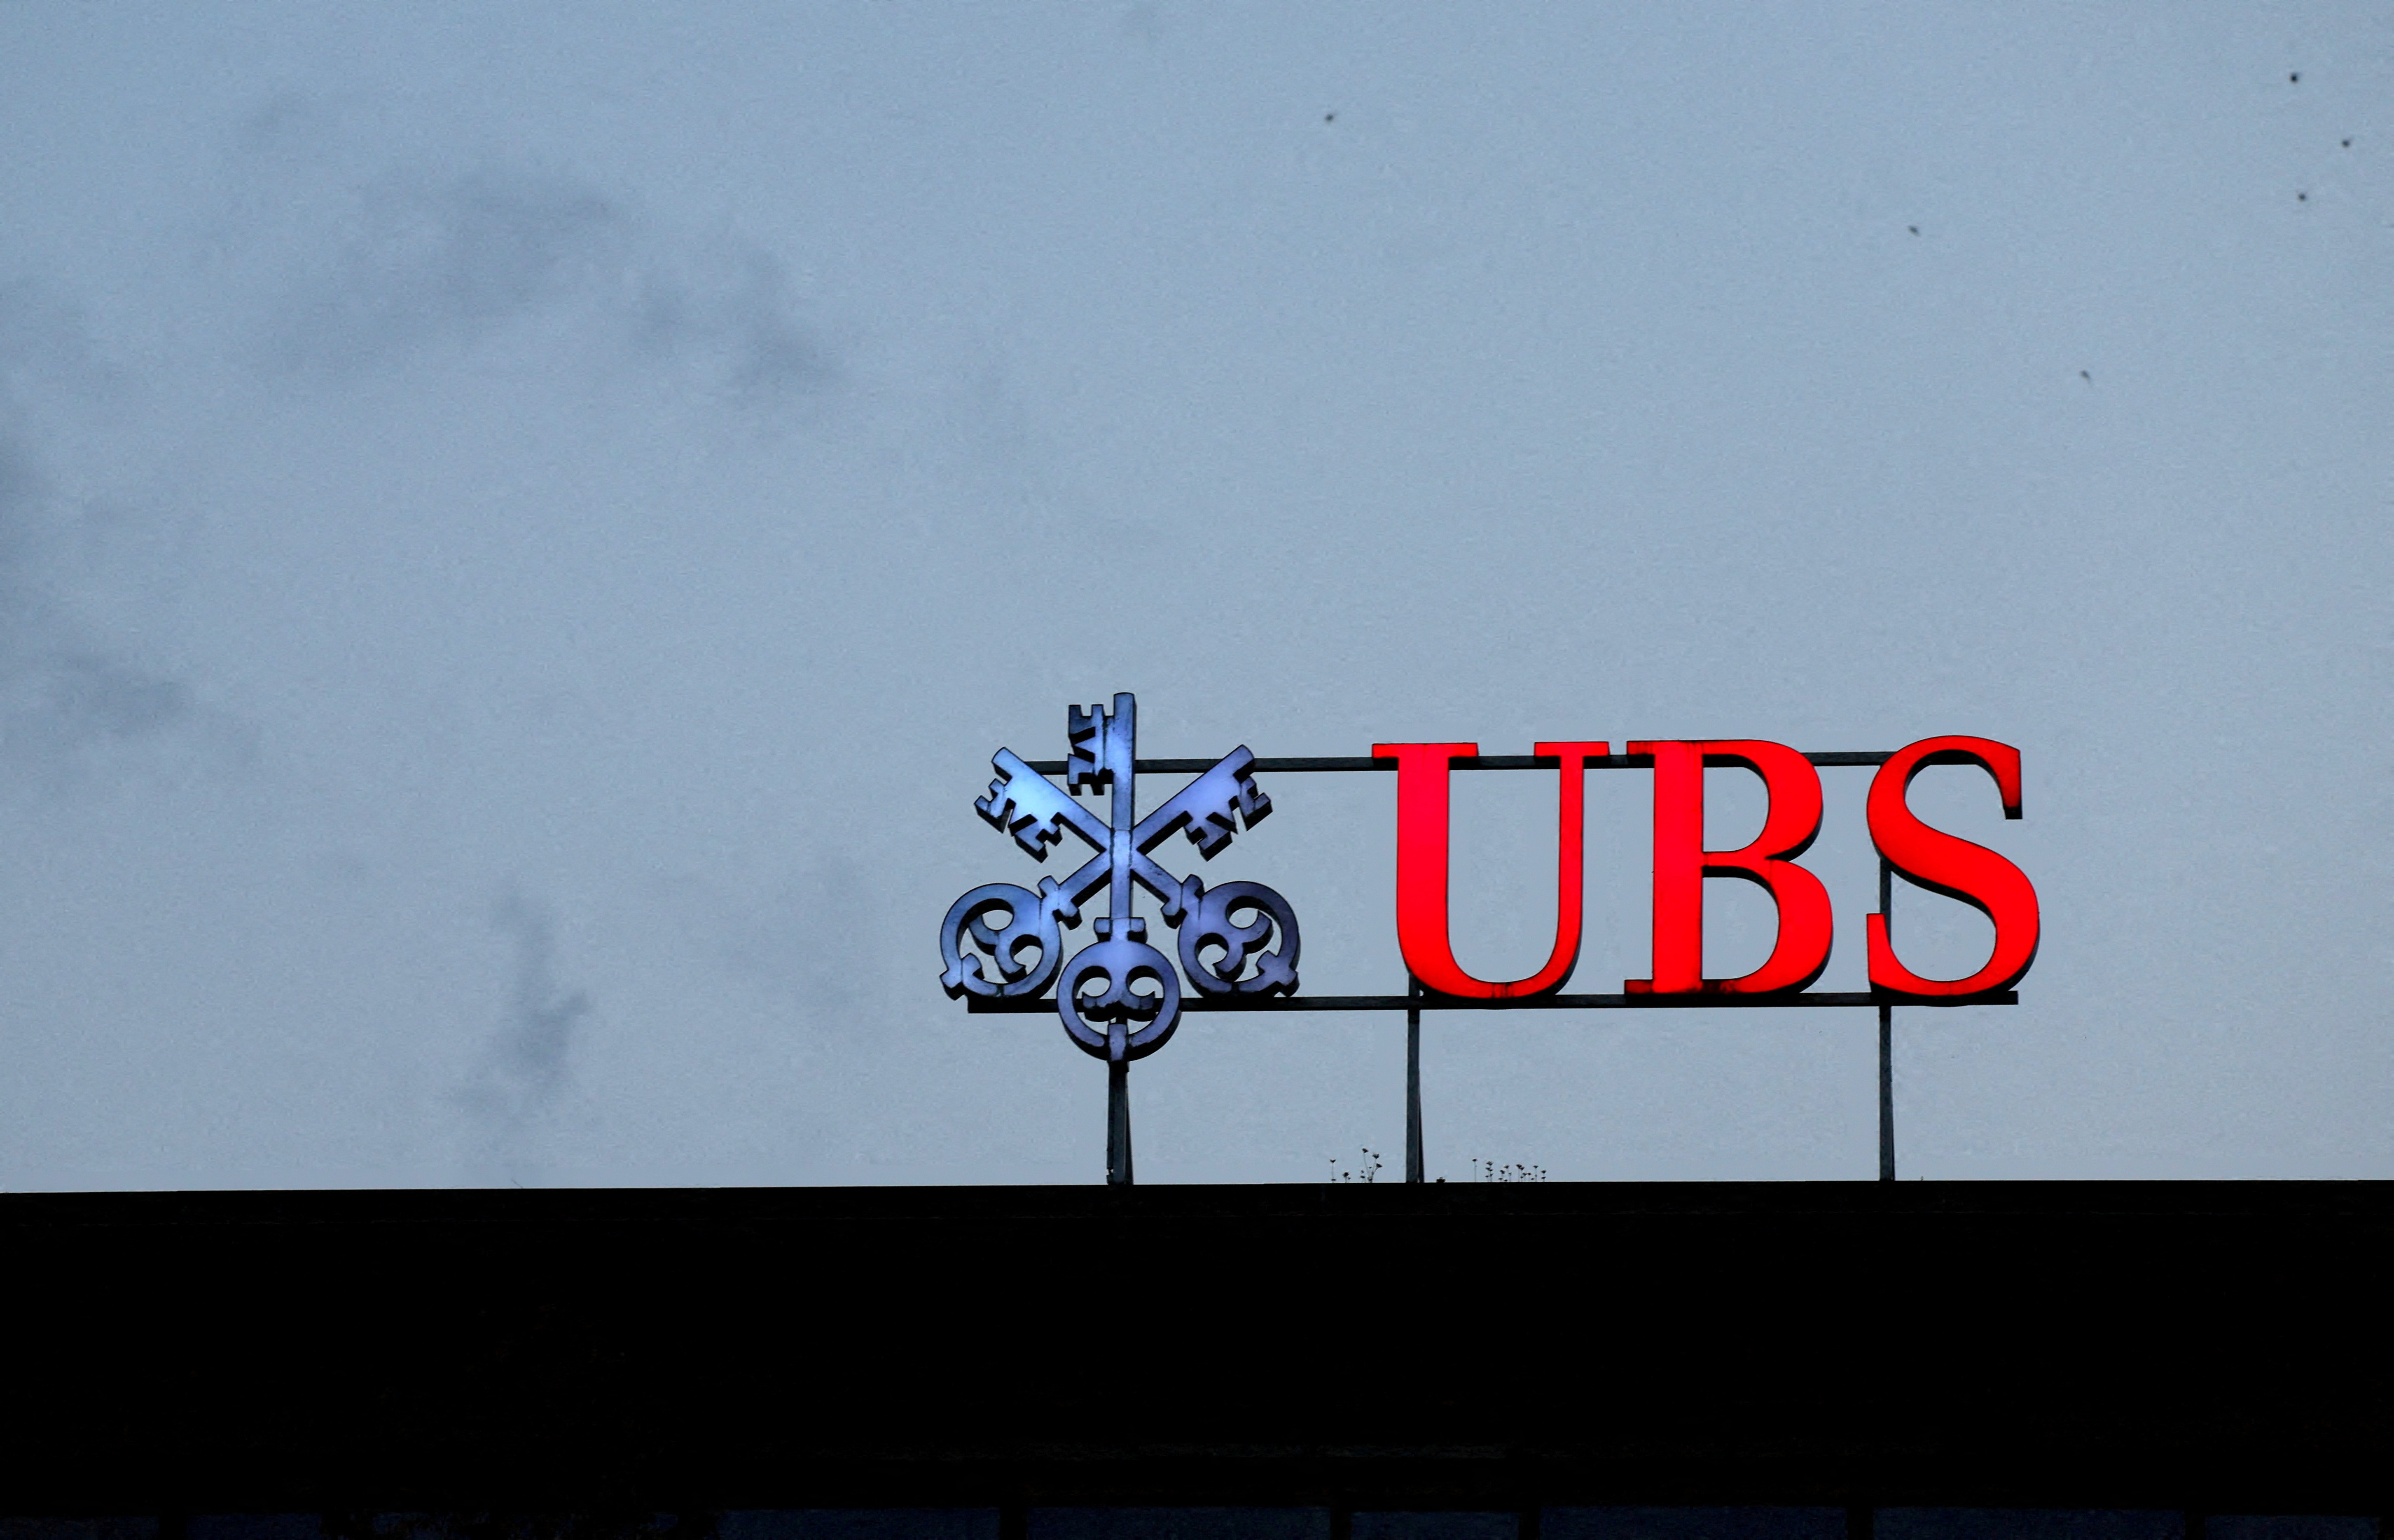 Swiss bank UBS'  logo